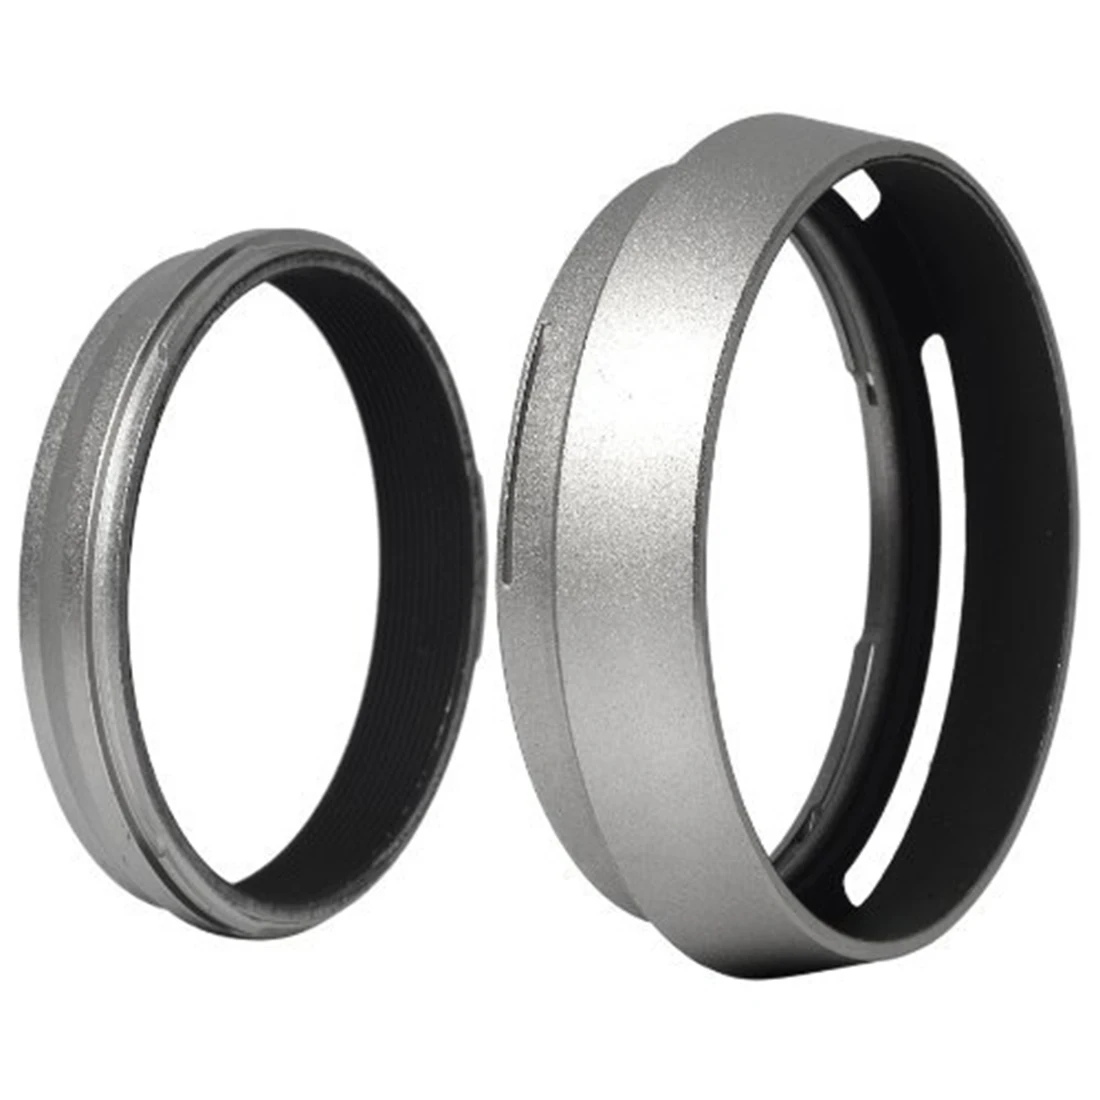 

Filter Adapter Ring + Aluminum metal Lens Hood for Fujifilm Fuji FinePix X100 Replace LH-X100 LF91